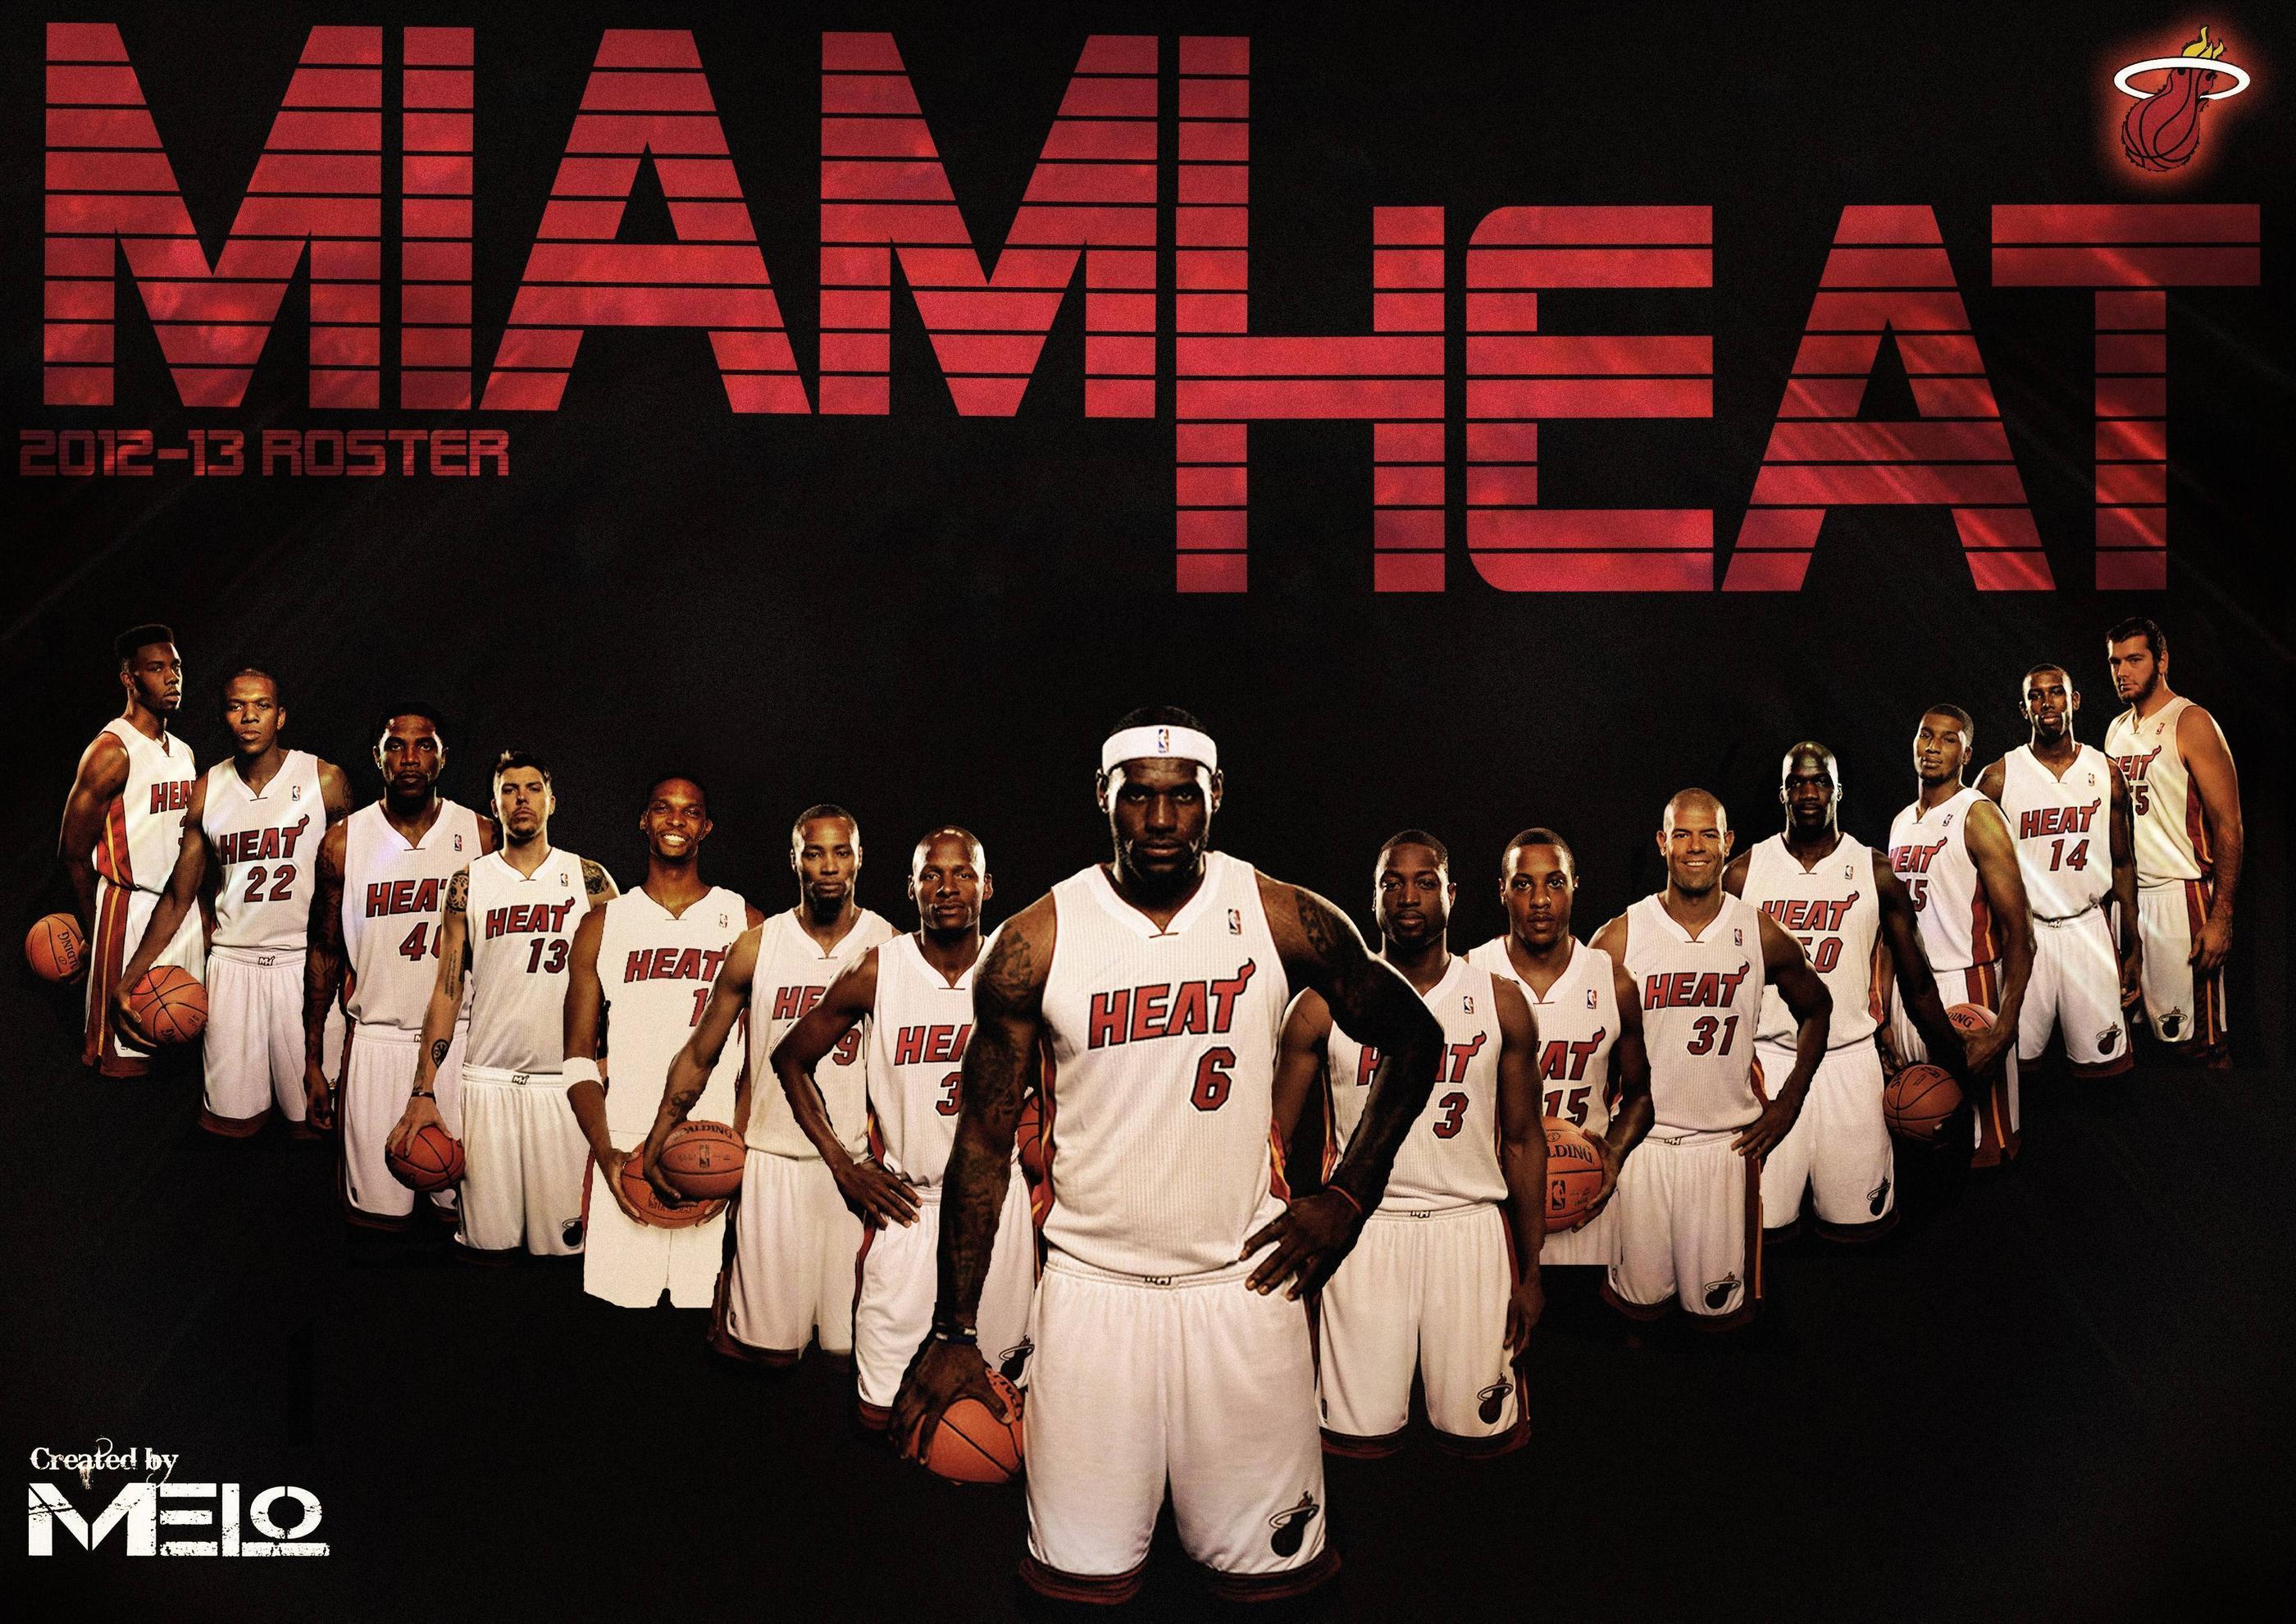 Miami Heat. The world according to Lamar